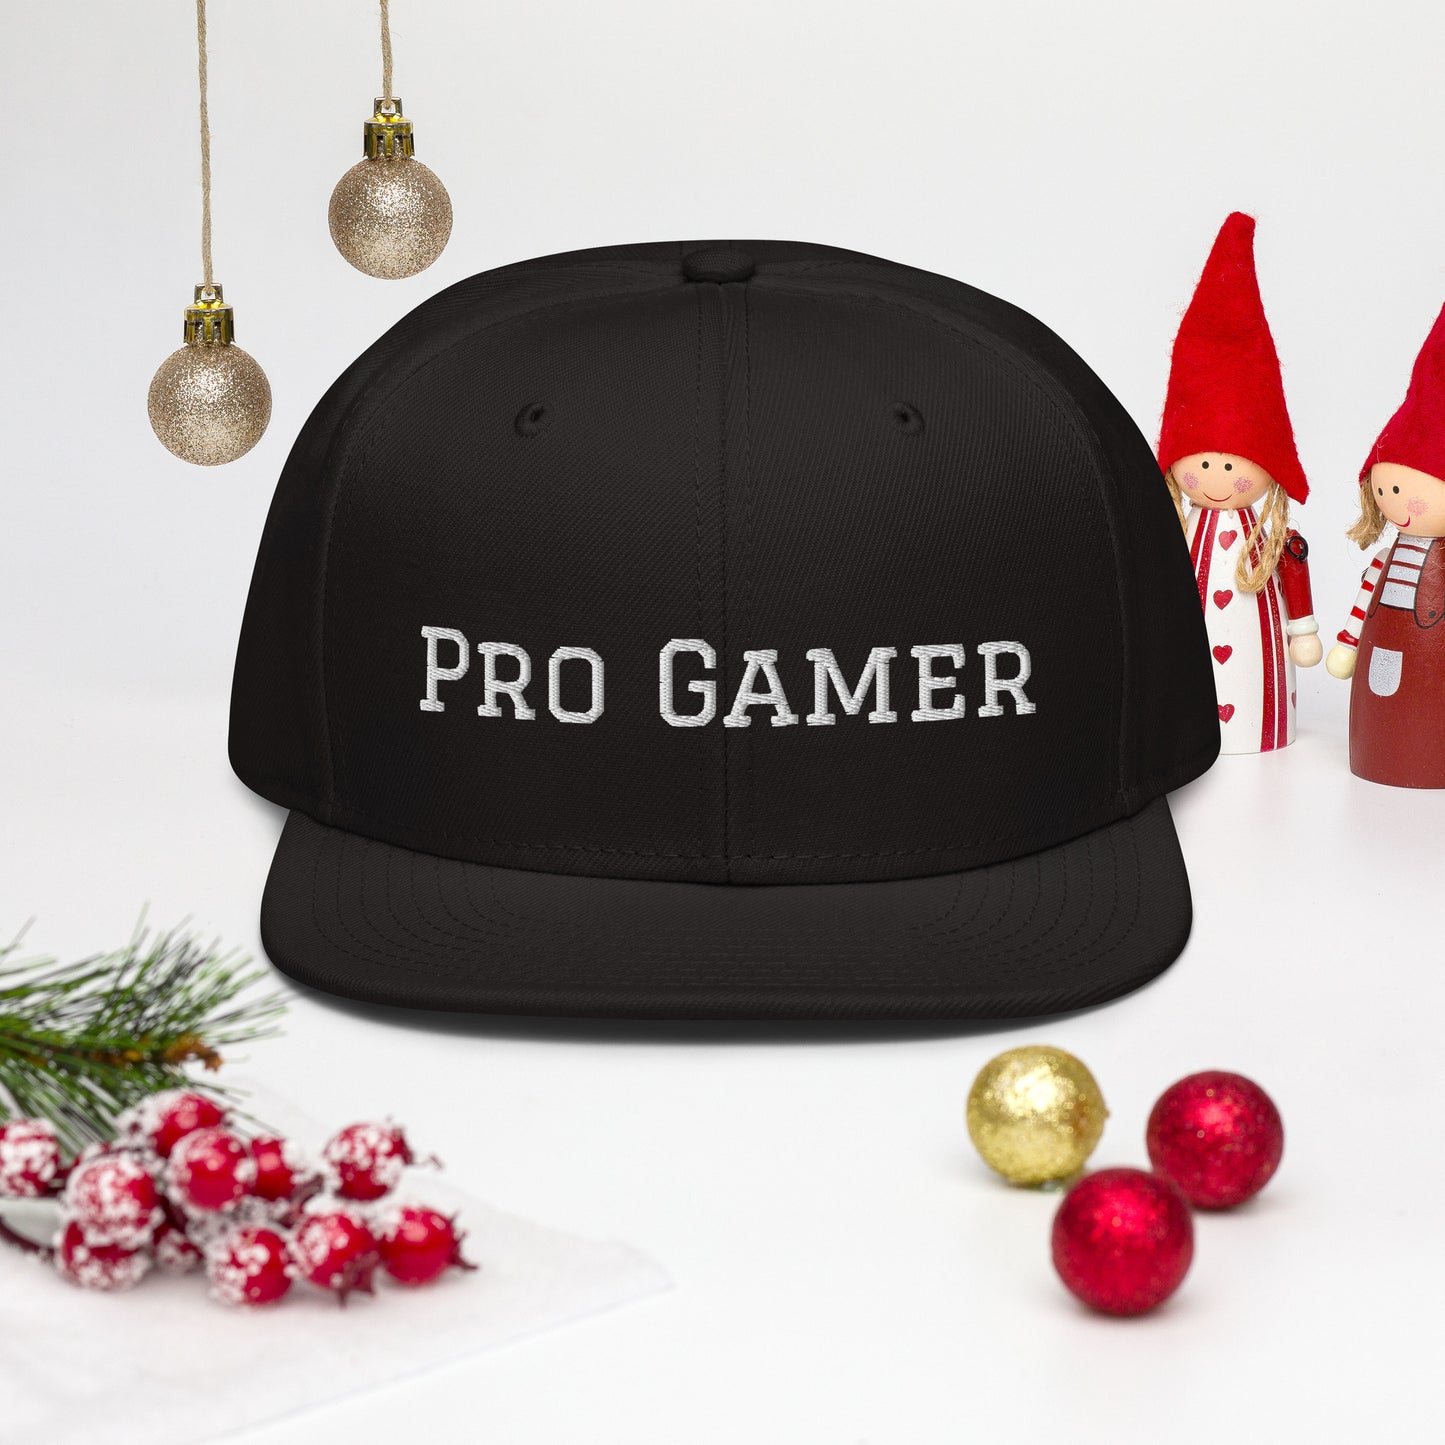 Pro Gamer Snapback Hat